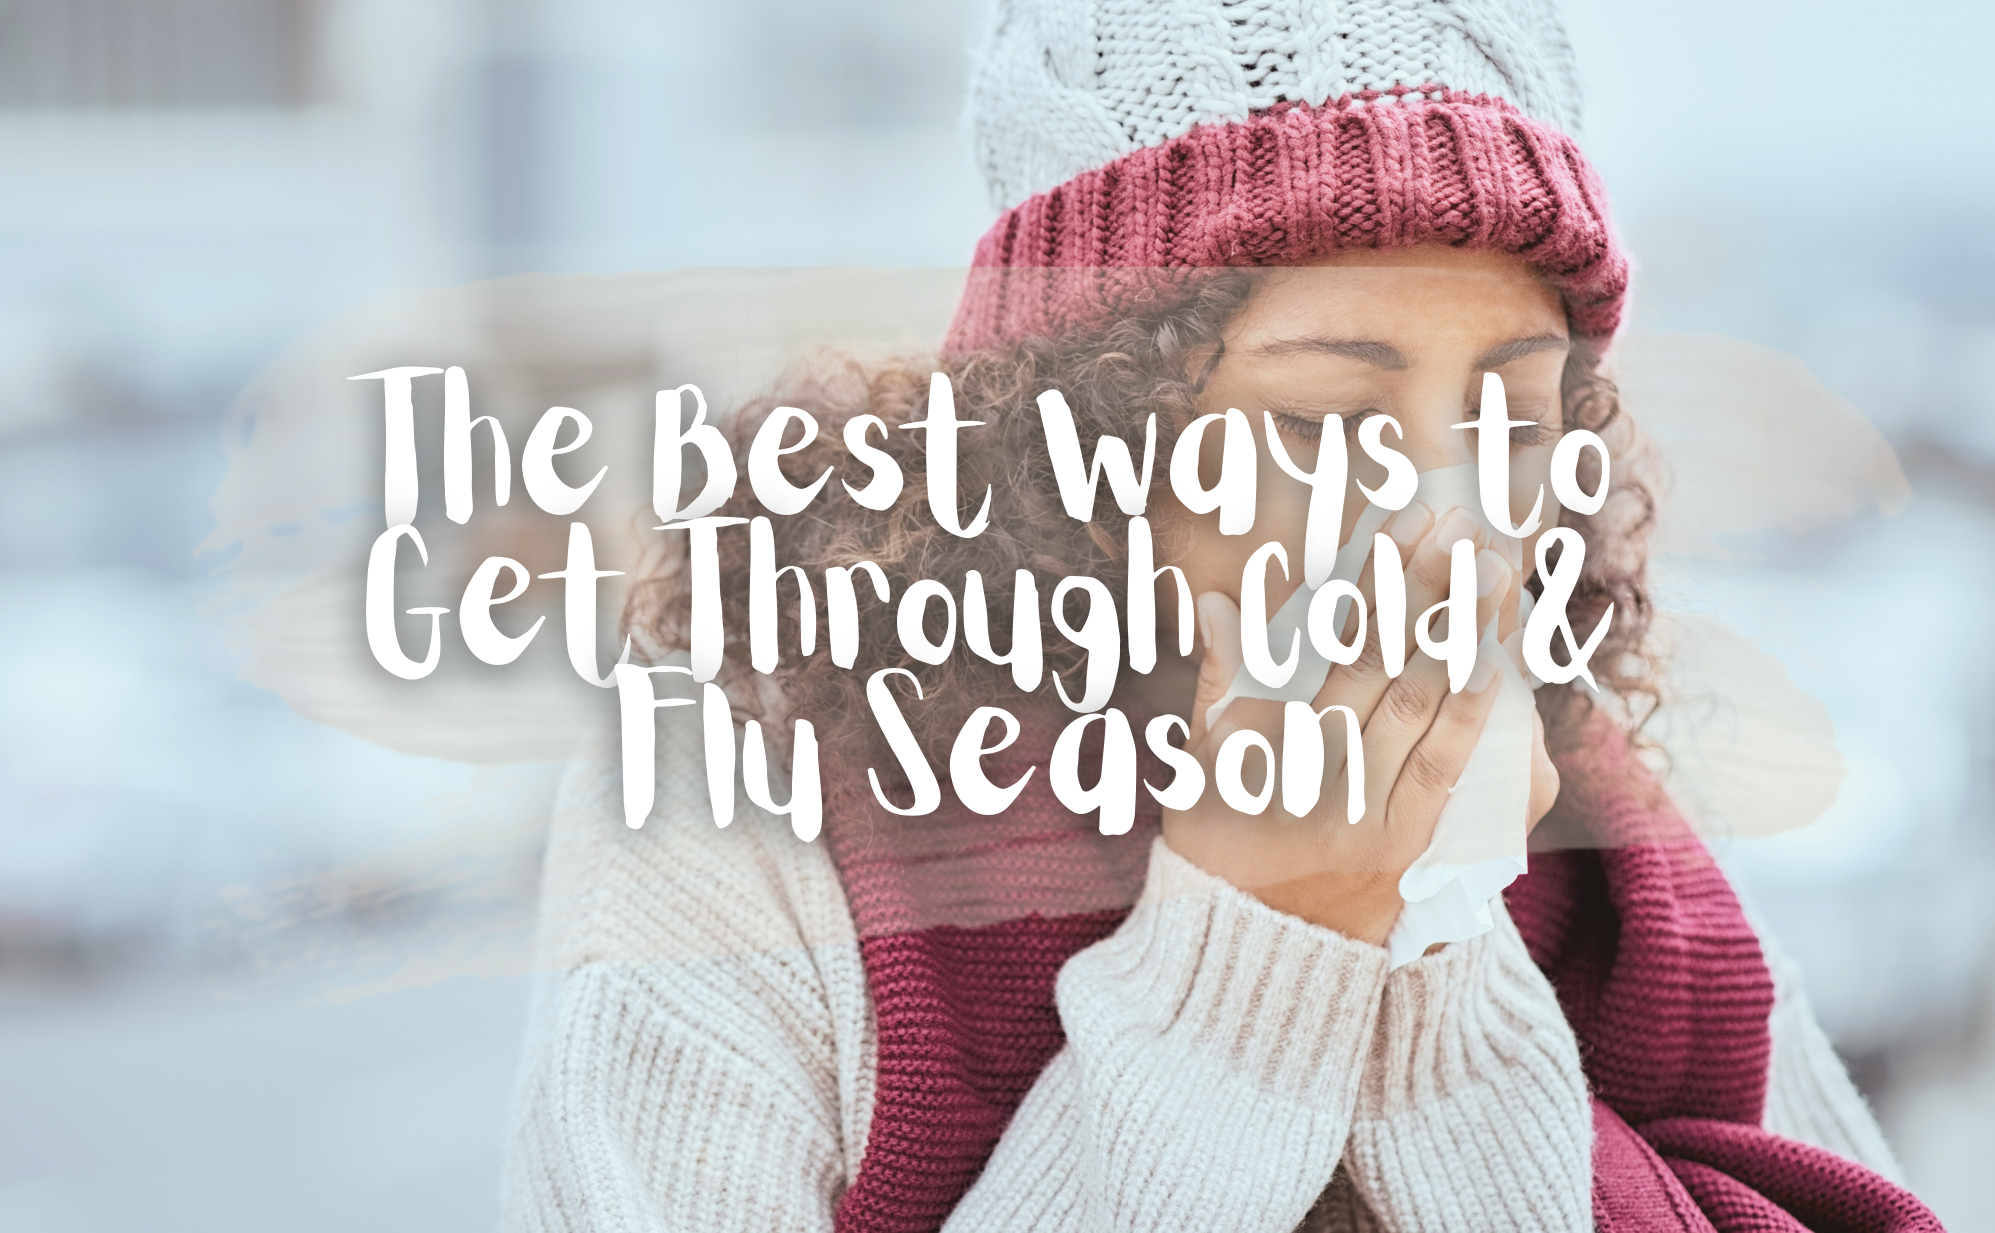 The Best Ways to Get Through Cold & Flu Season